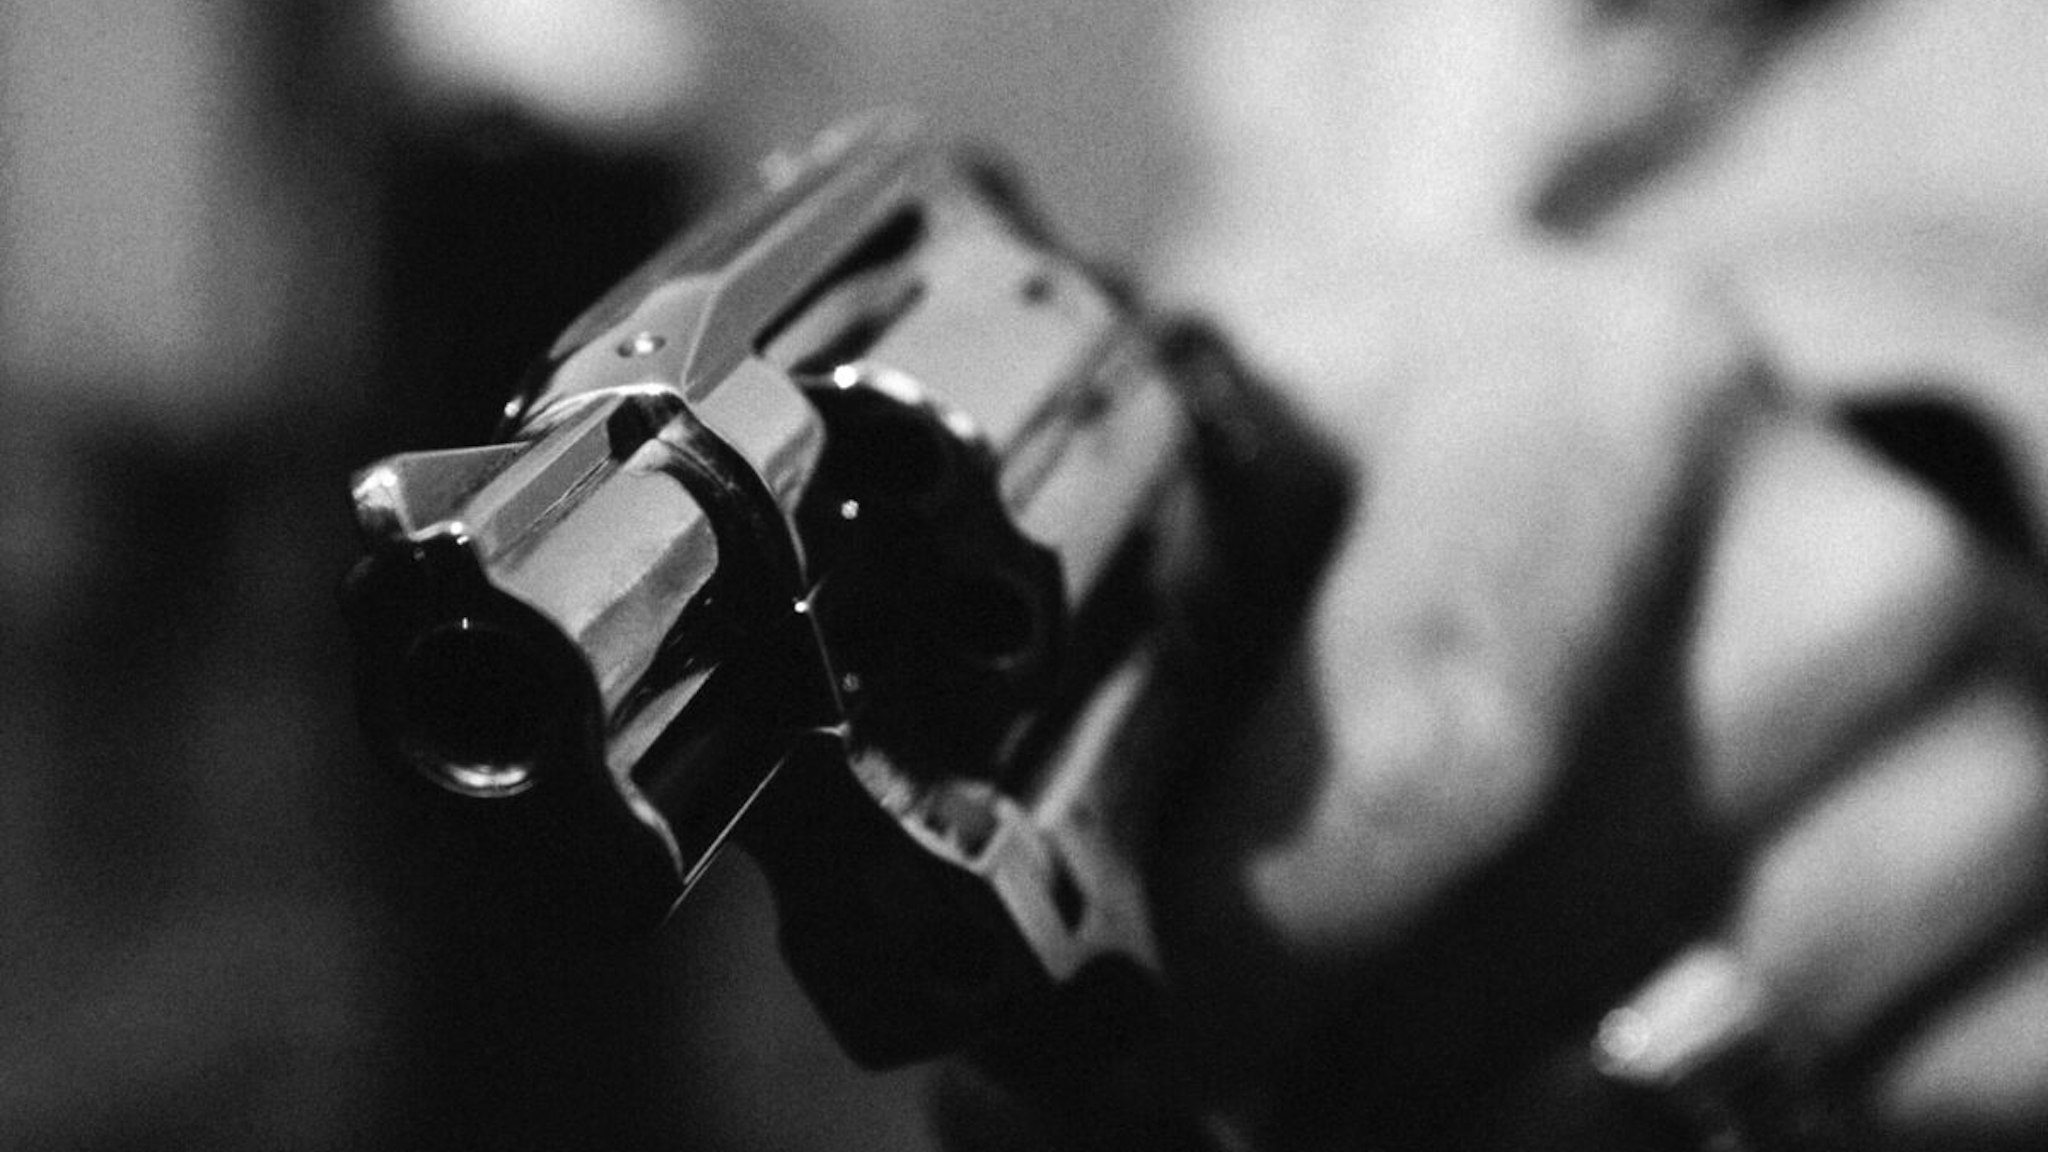 Hand holding gun, close-up, b&w